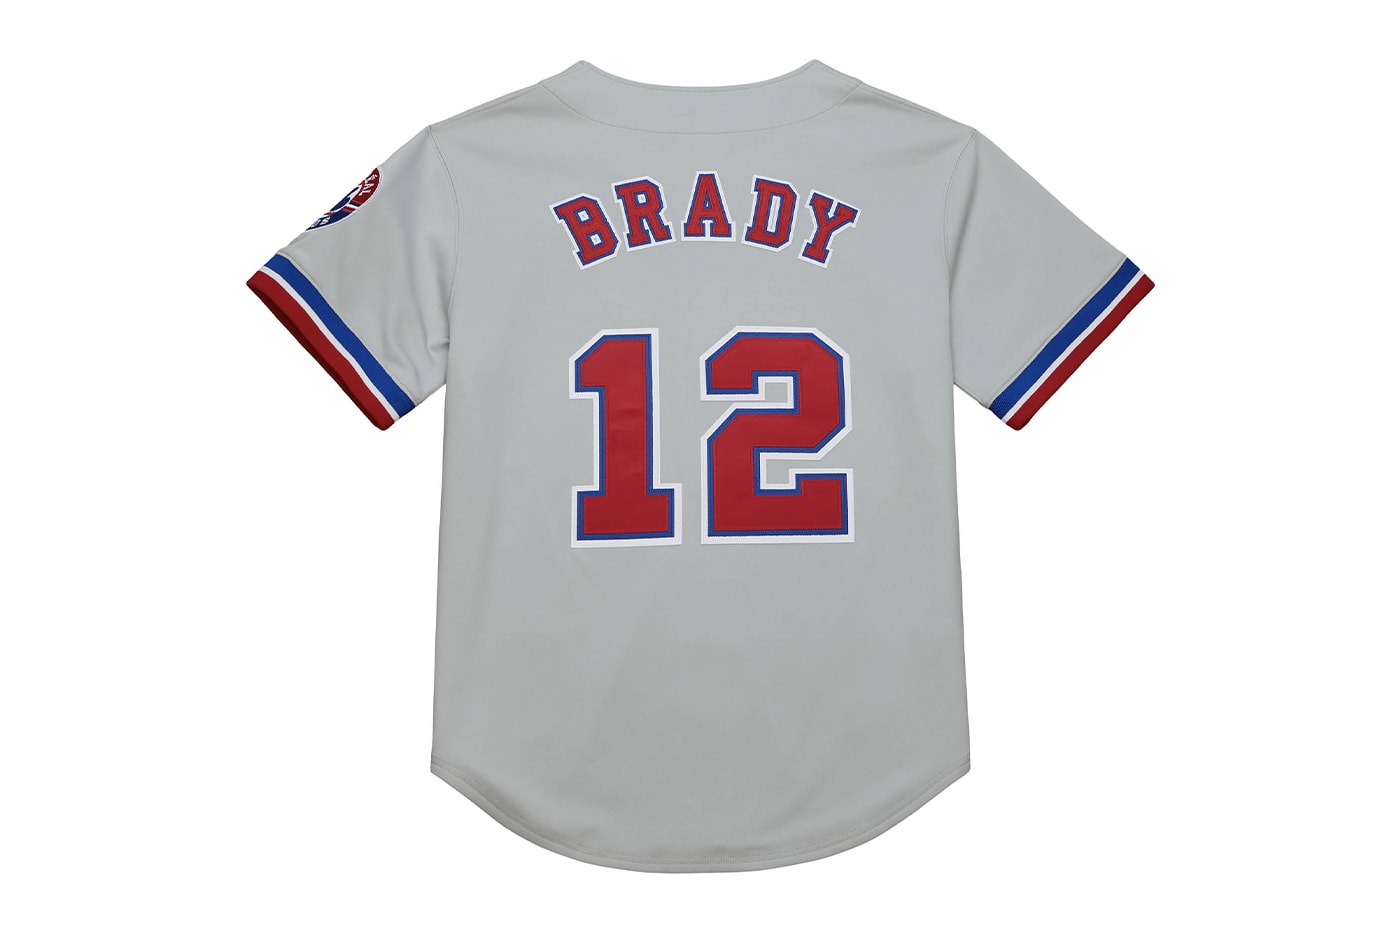 Tom Brady Talks About His BRADY Clothing Brand Ahead of New Drop